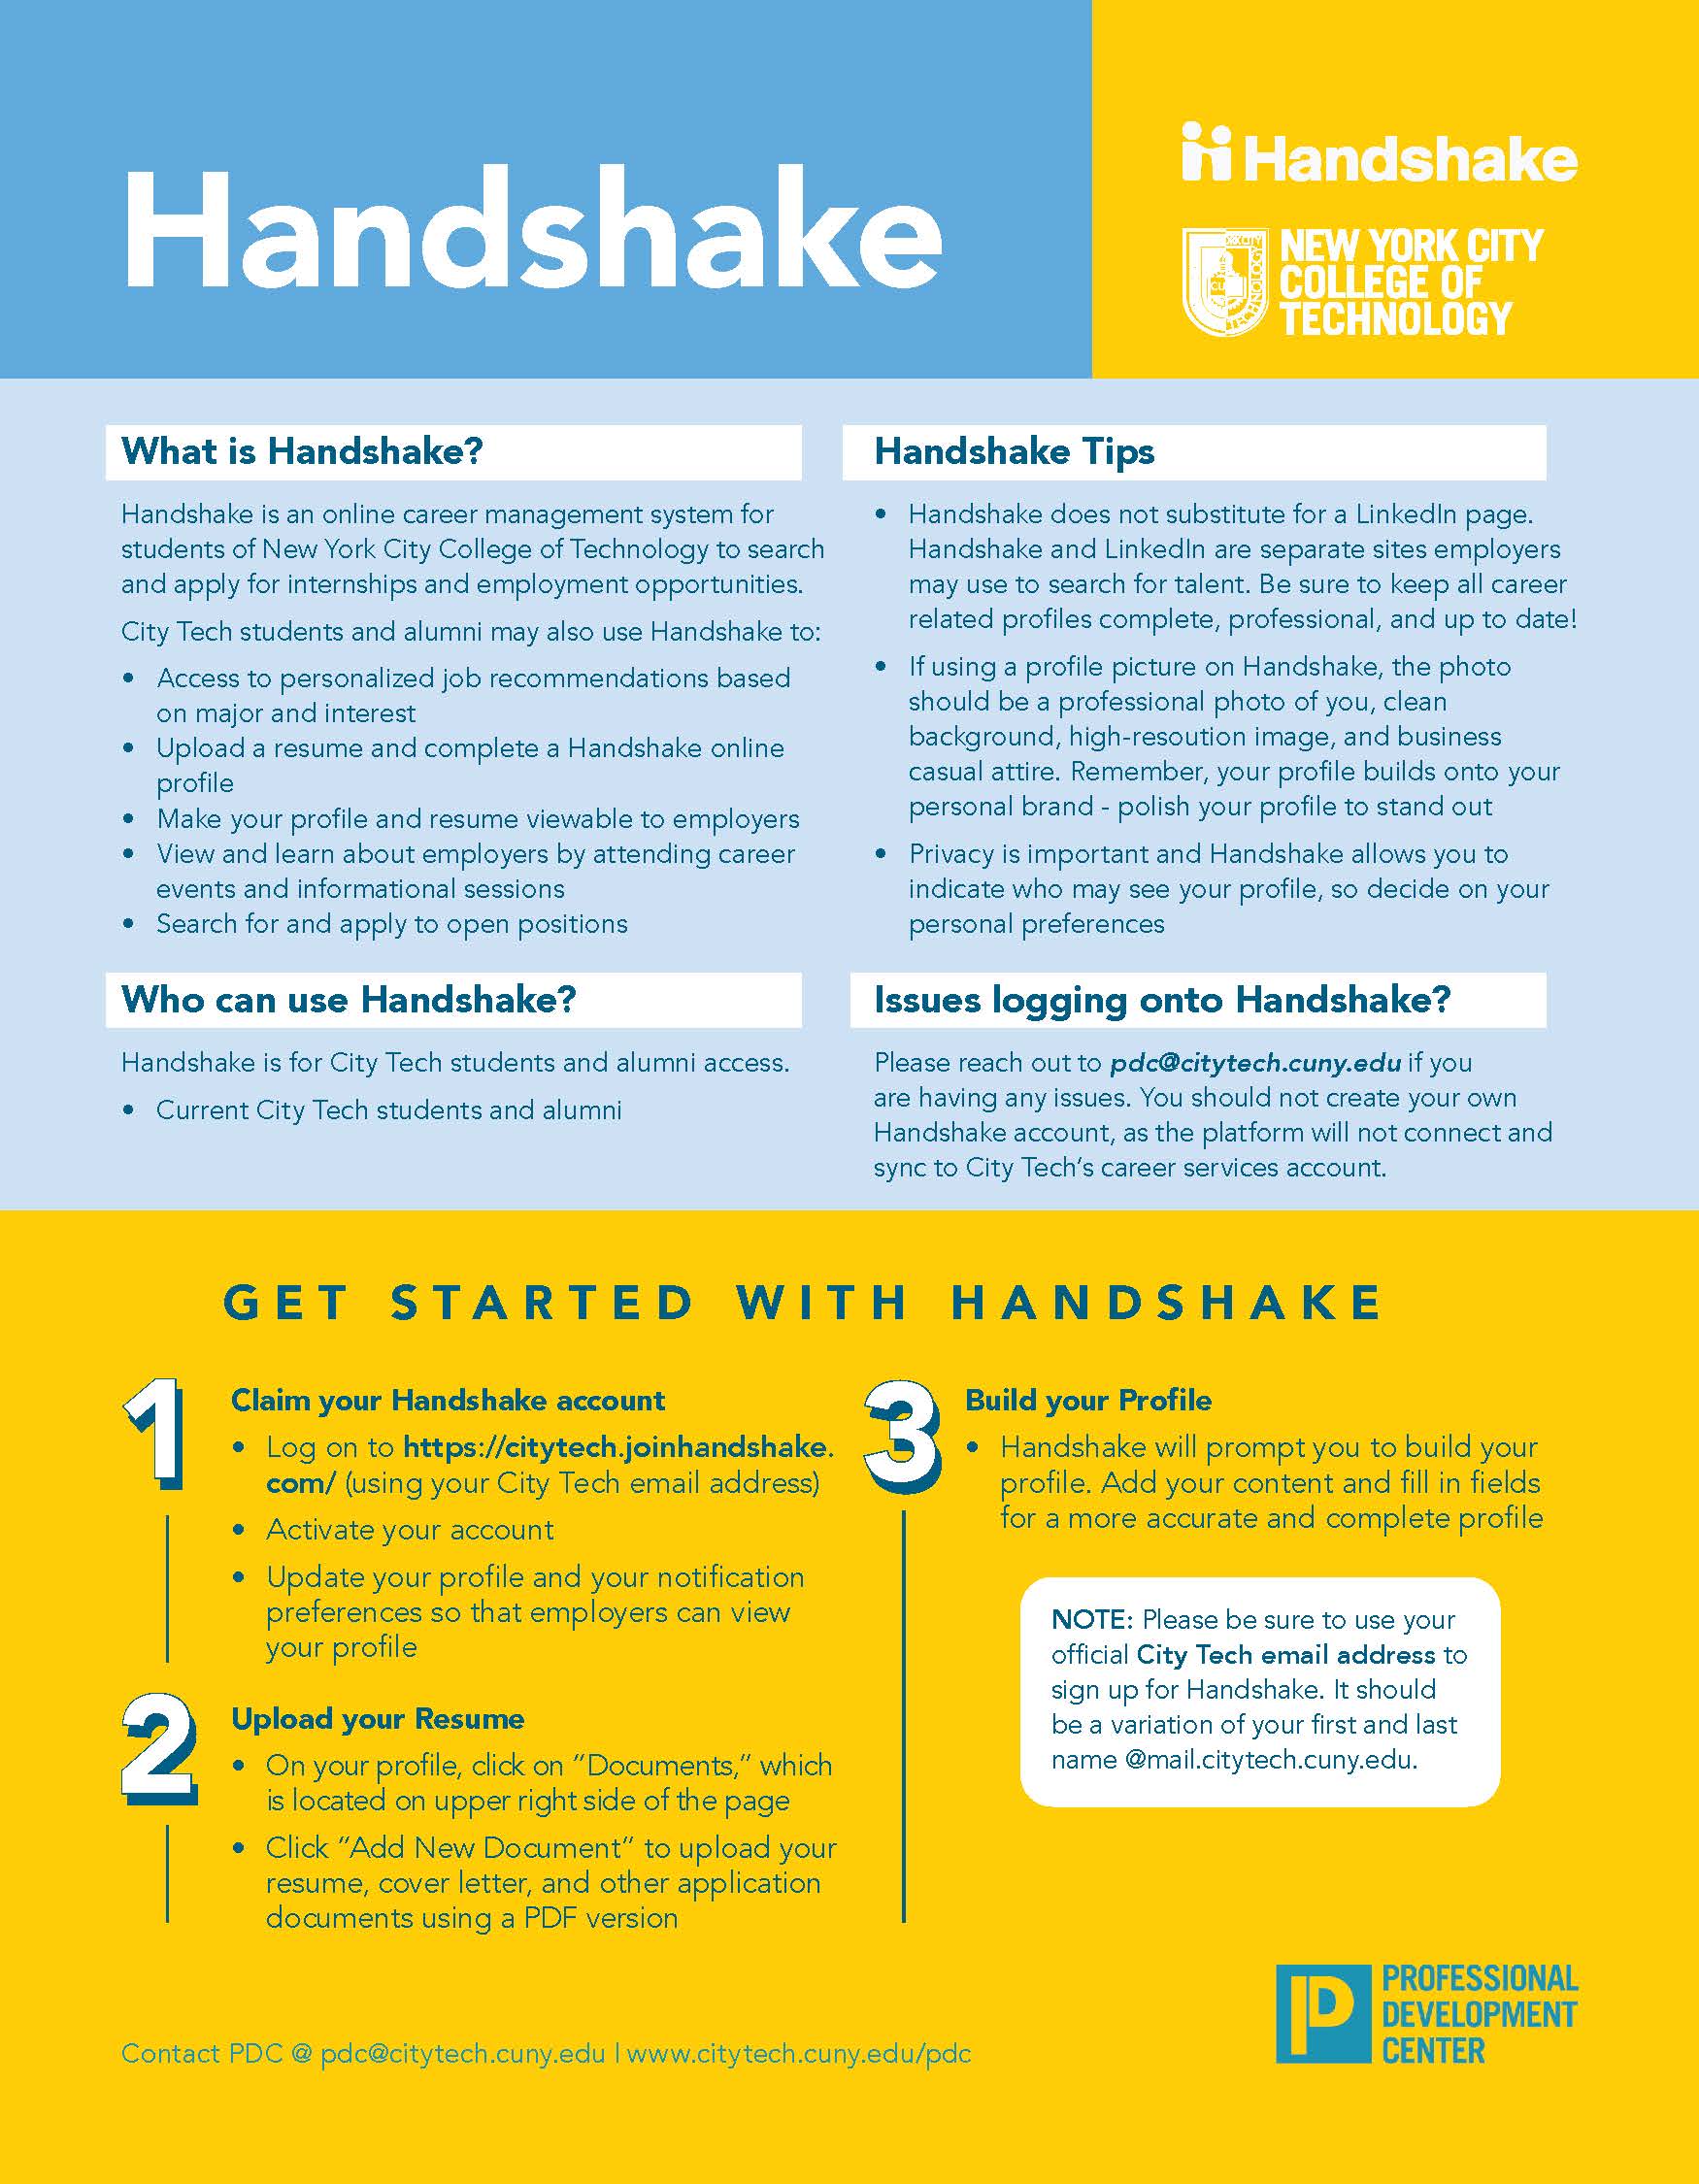 What is Handshake